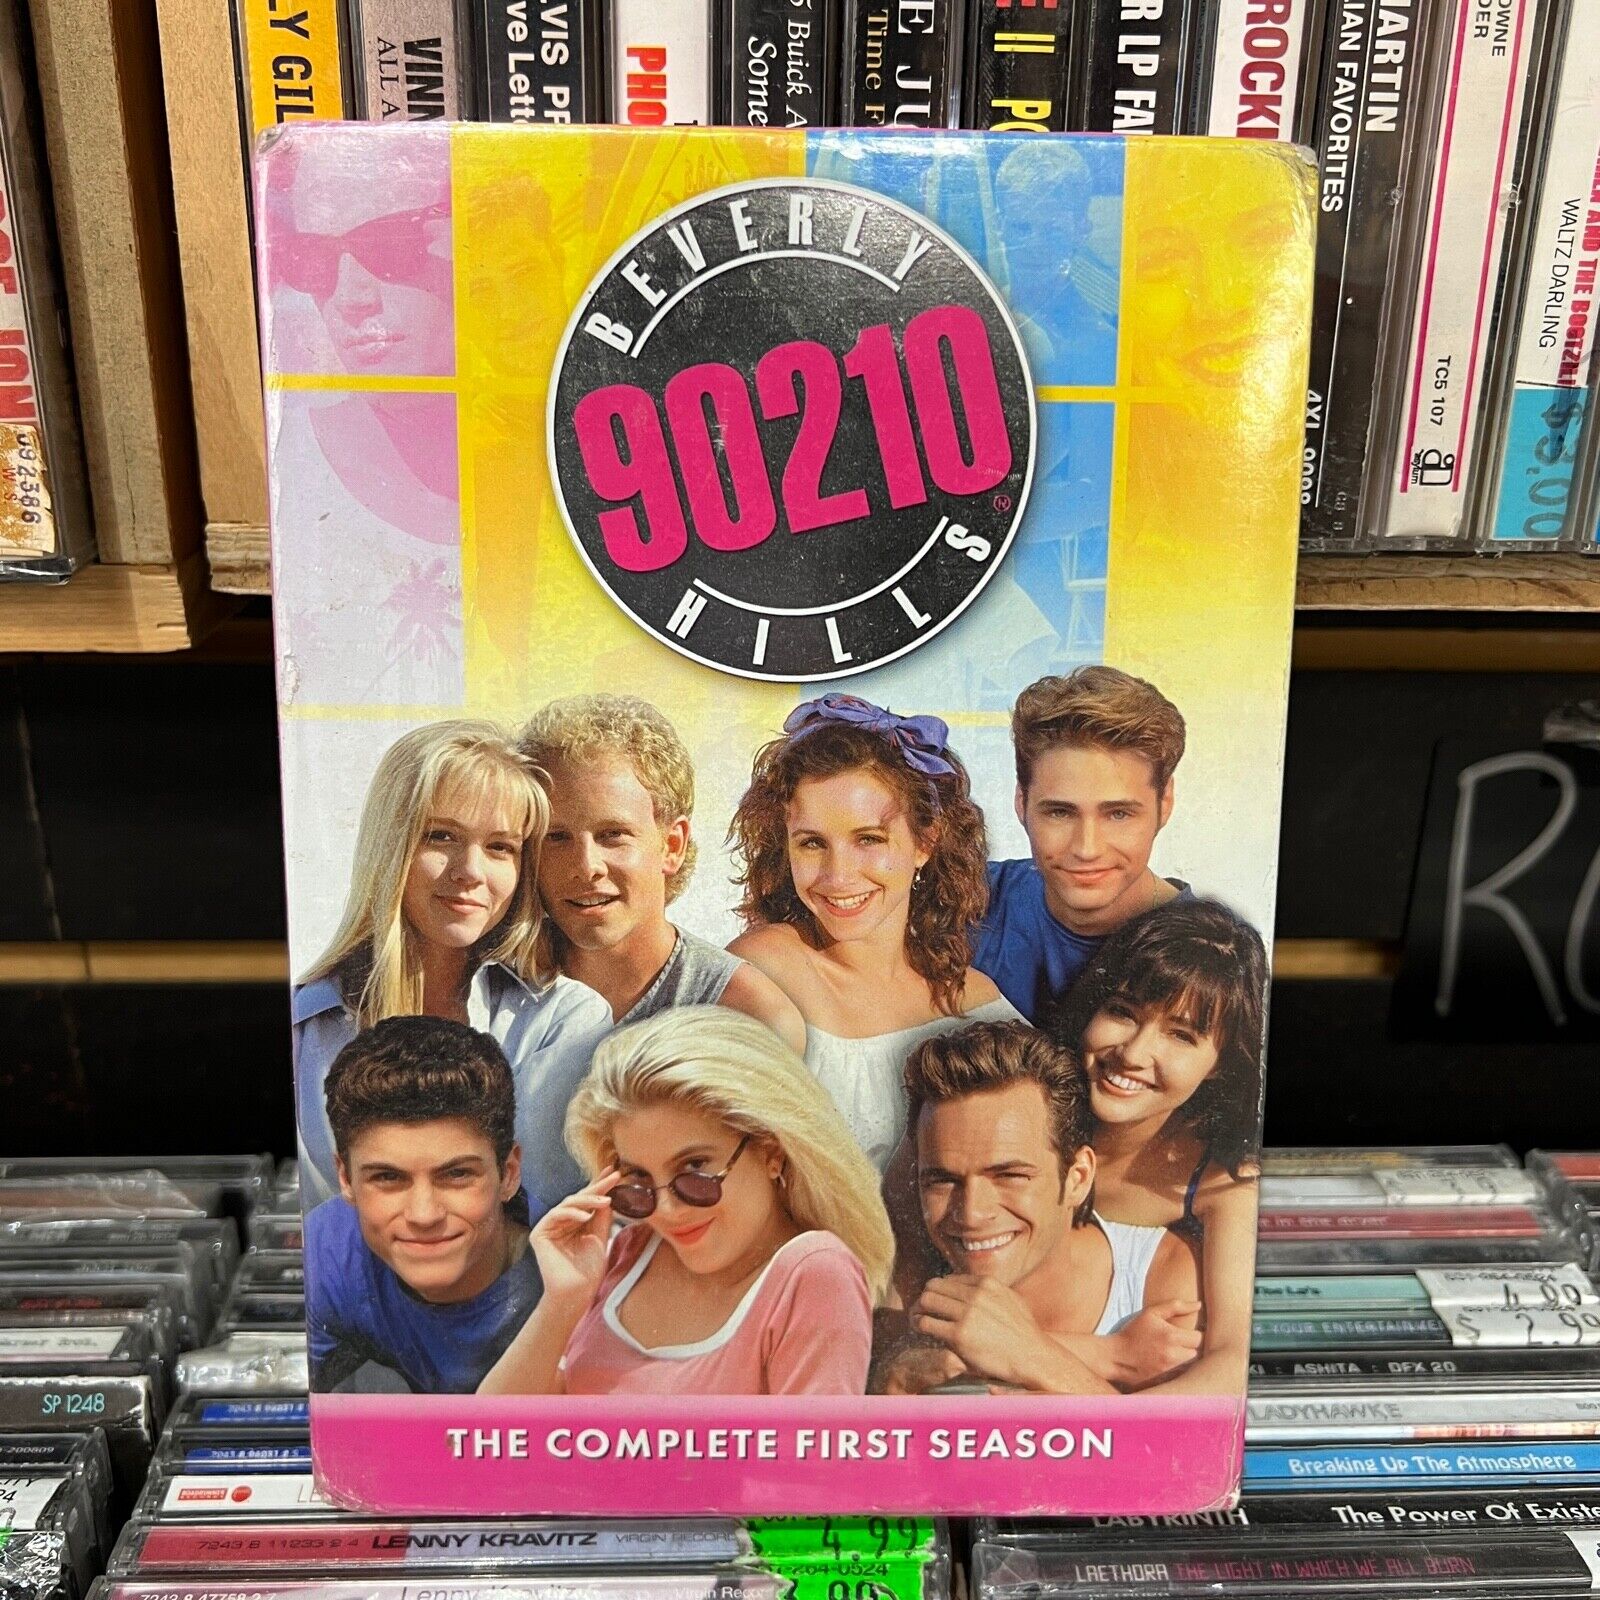 BEVERLY HILLS 90210 - First Season (1) [DVD, NEW] SEALED!!! | eBay